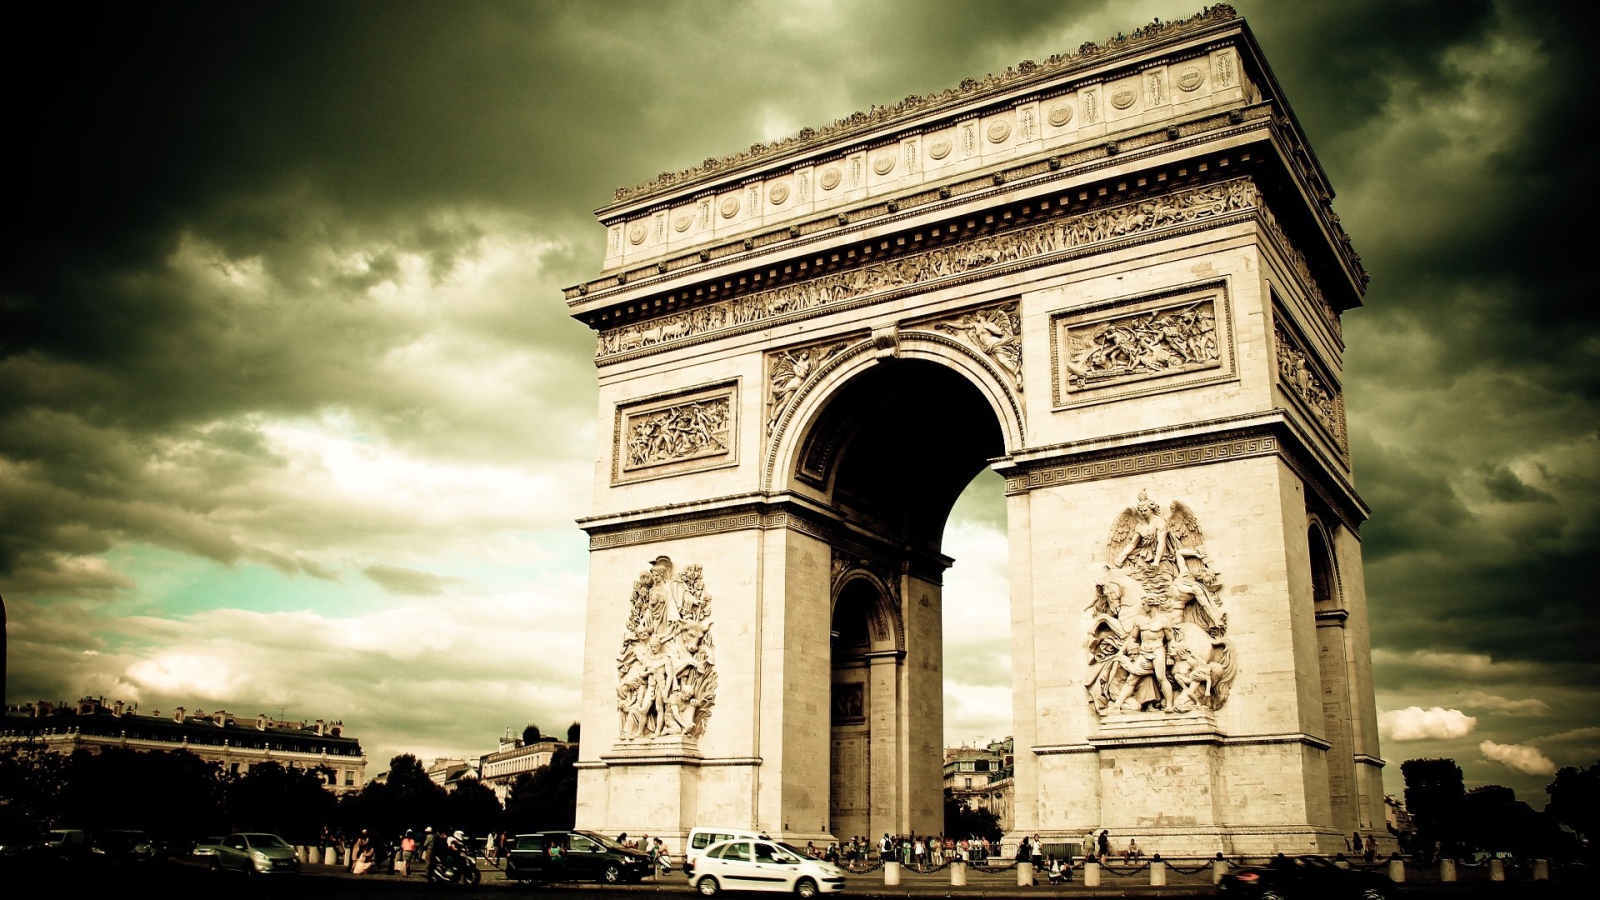 Триумфальная арка Франция